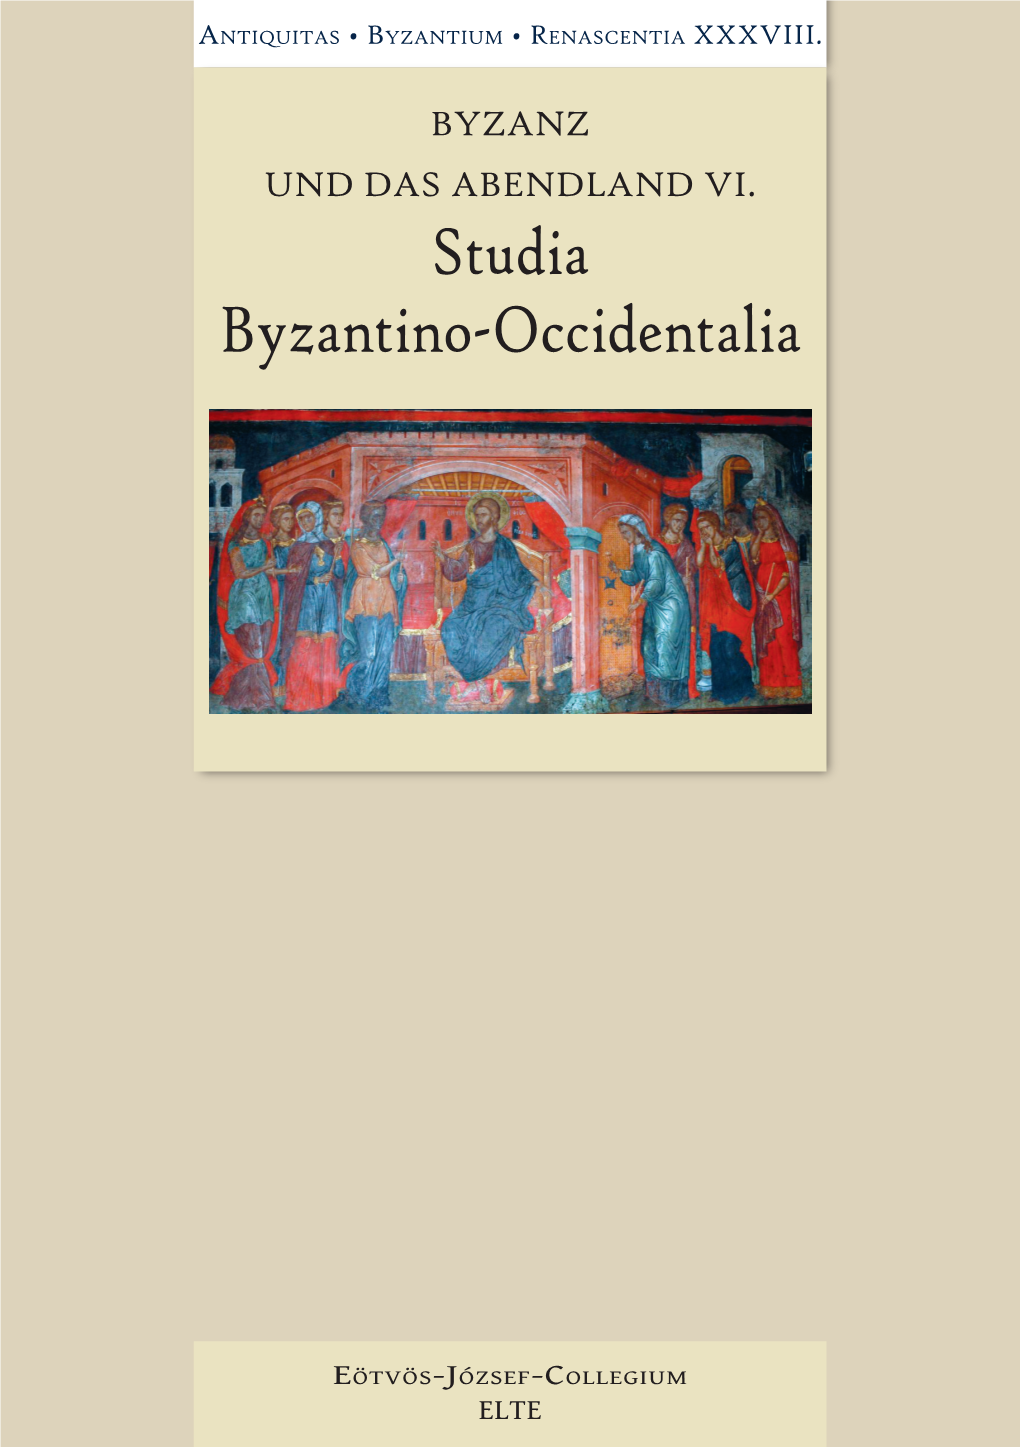 Studia Byzantino-Occidentalia a Byzantino-Occidentalia Ntiquitas UND DASABENDLANDVI